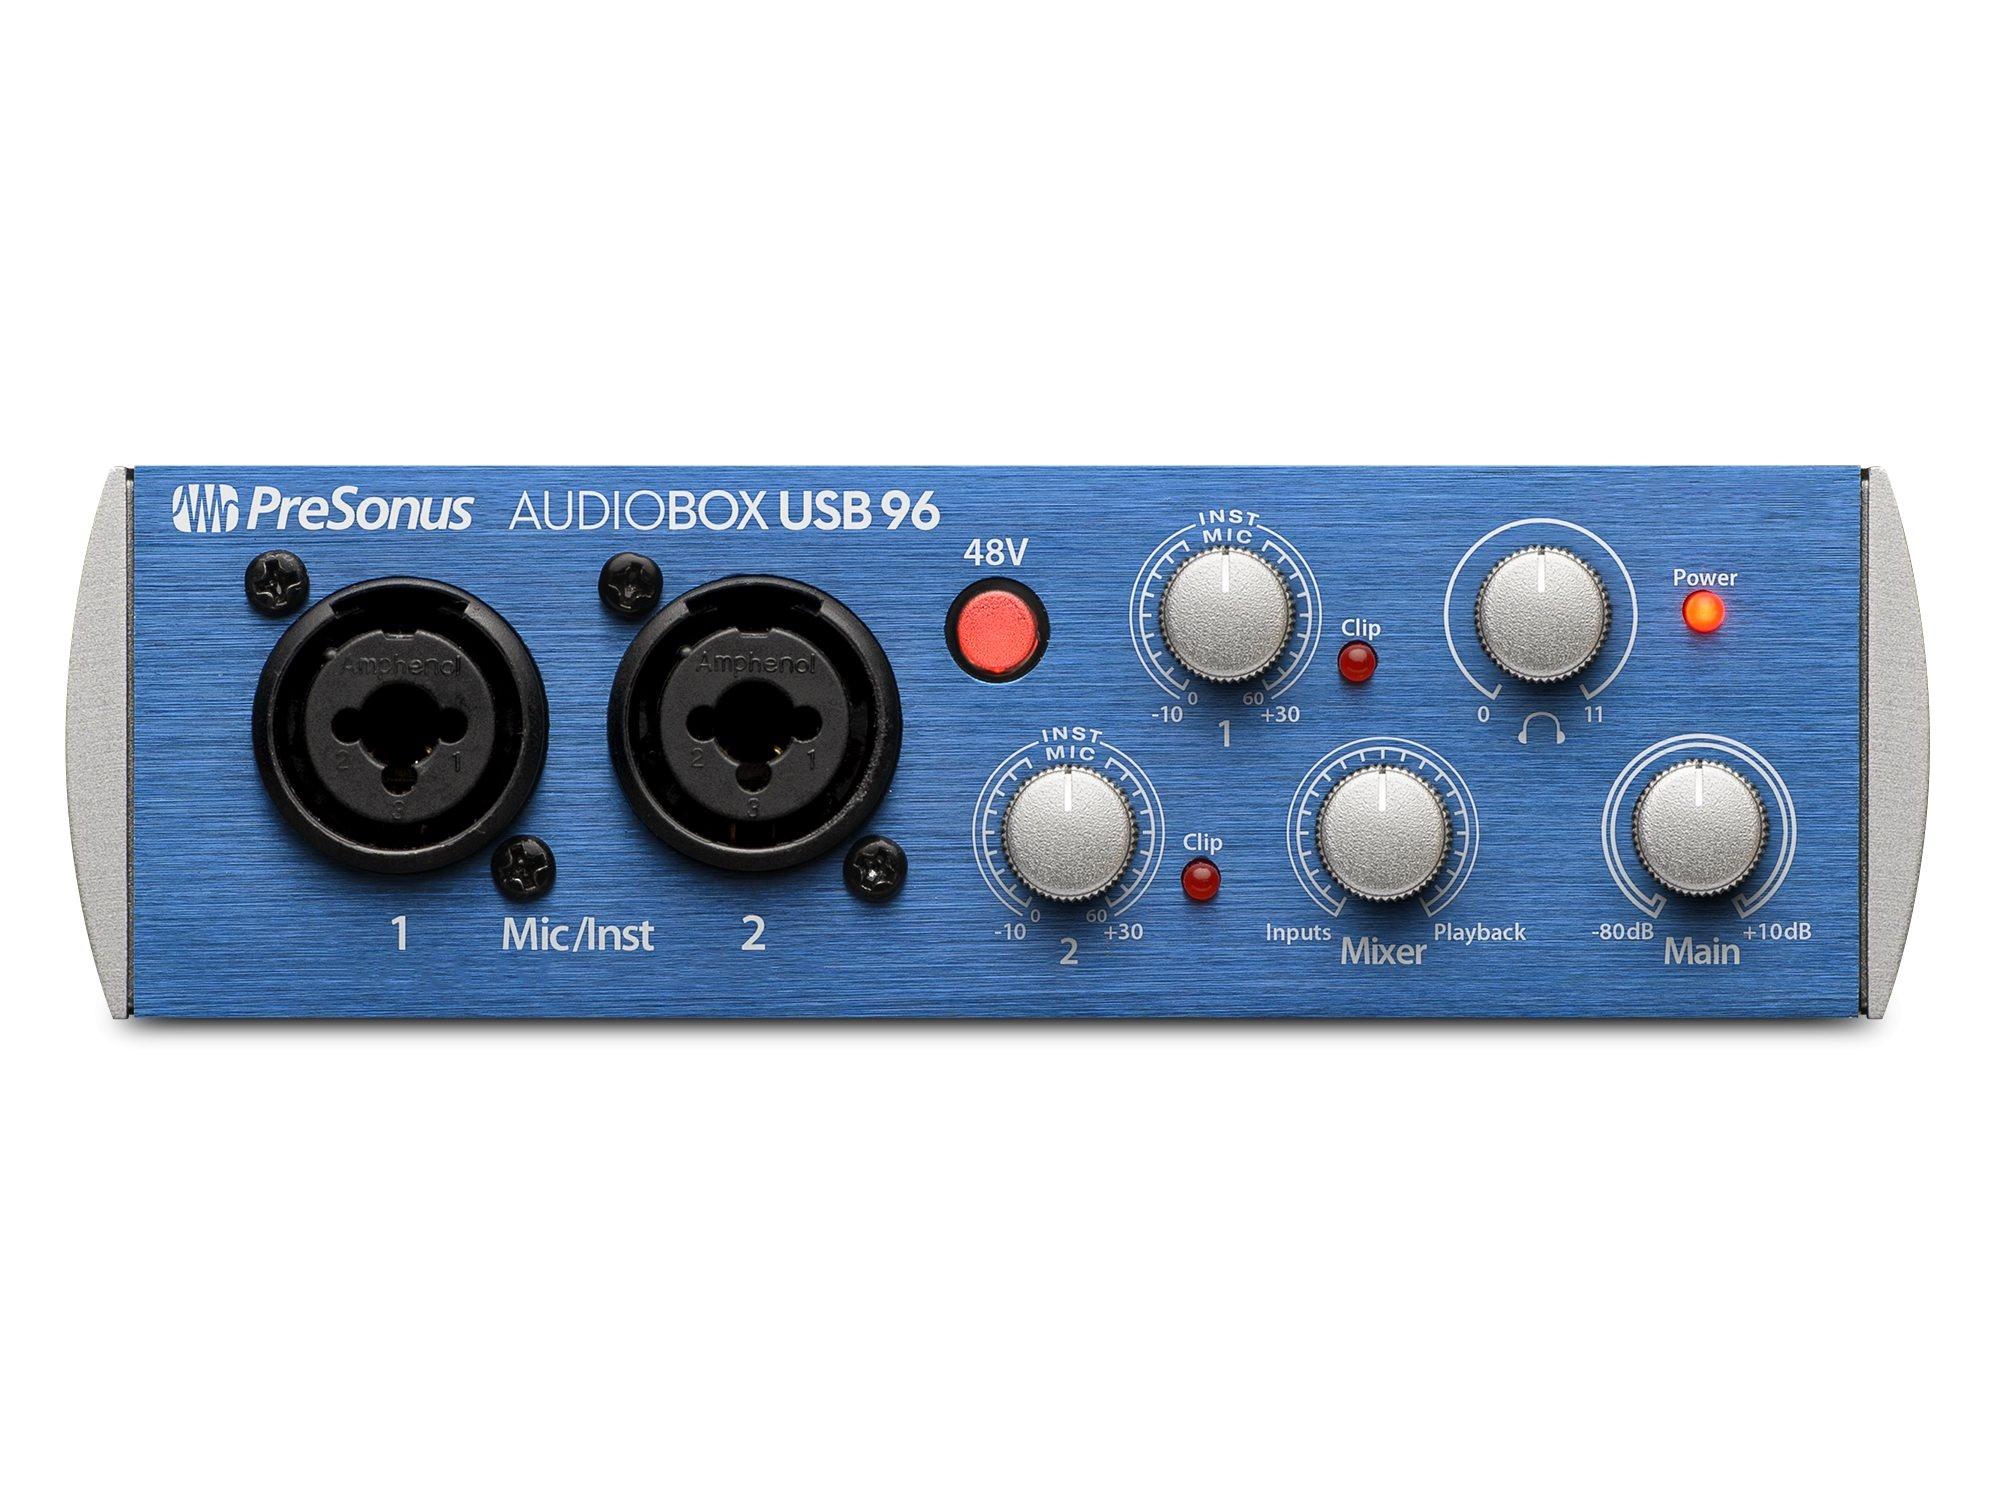 AudioBox USB 96 2x2 USB 2.0 Recording System/96kHz Audio Interface by PreSonus